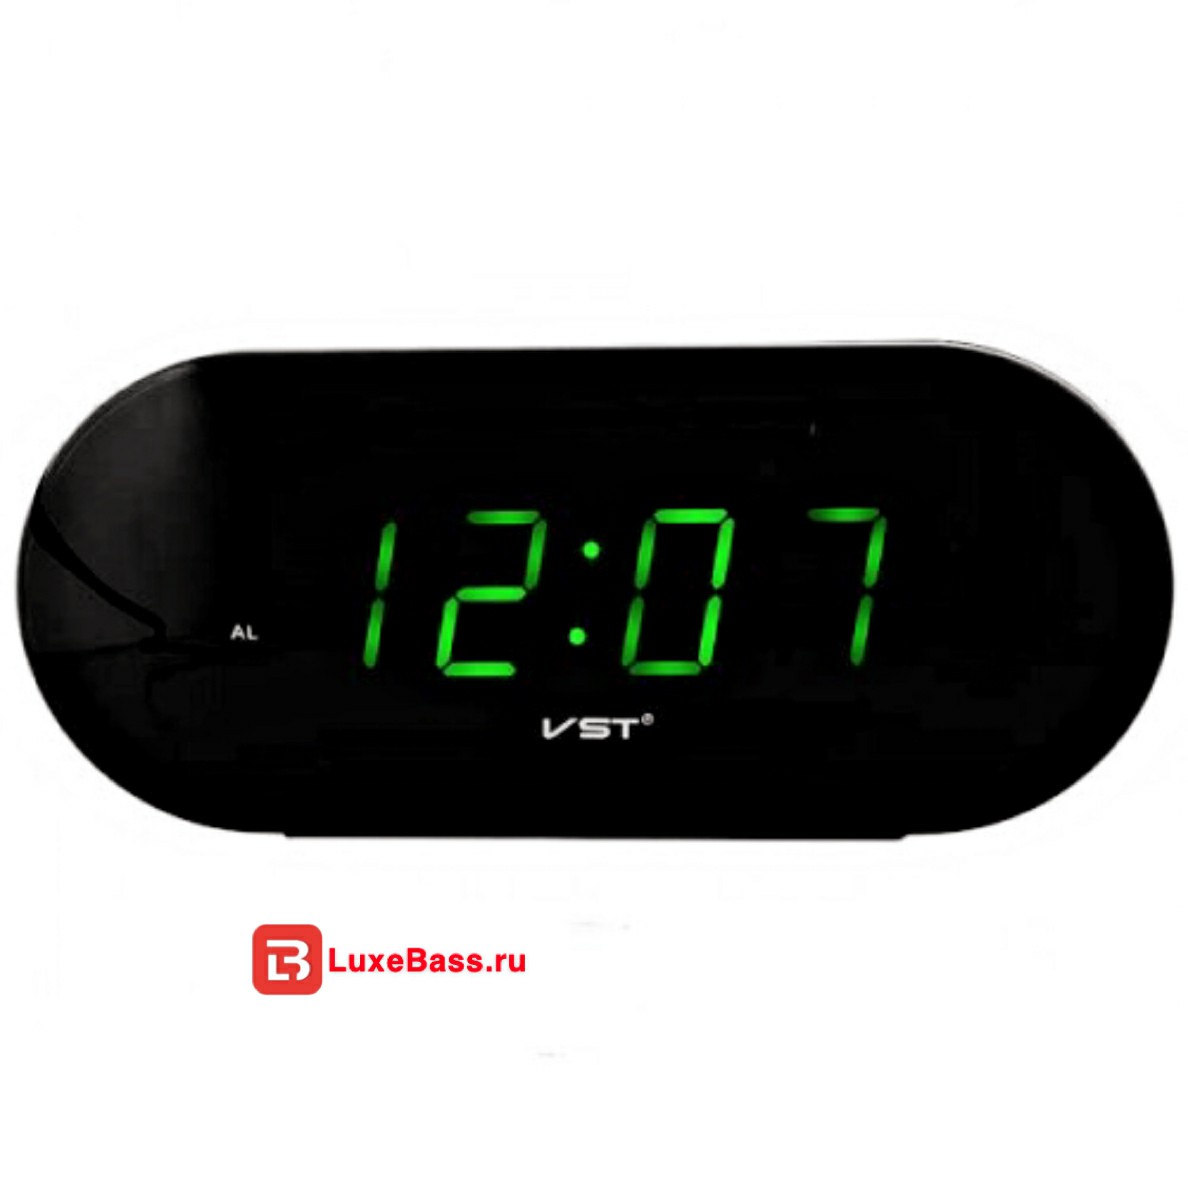 Купить электронную симферополь. Часы VST 718-4. Часы электронные VST-712 зел.. Часы-будильник электронные VST-712-4 зеленые. Часы-будильник VST-712-2.